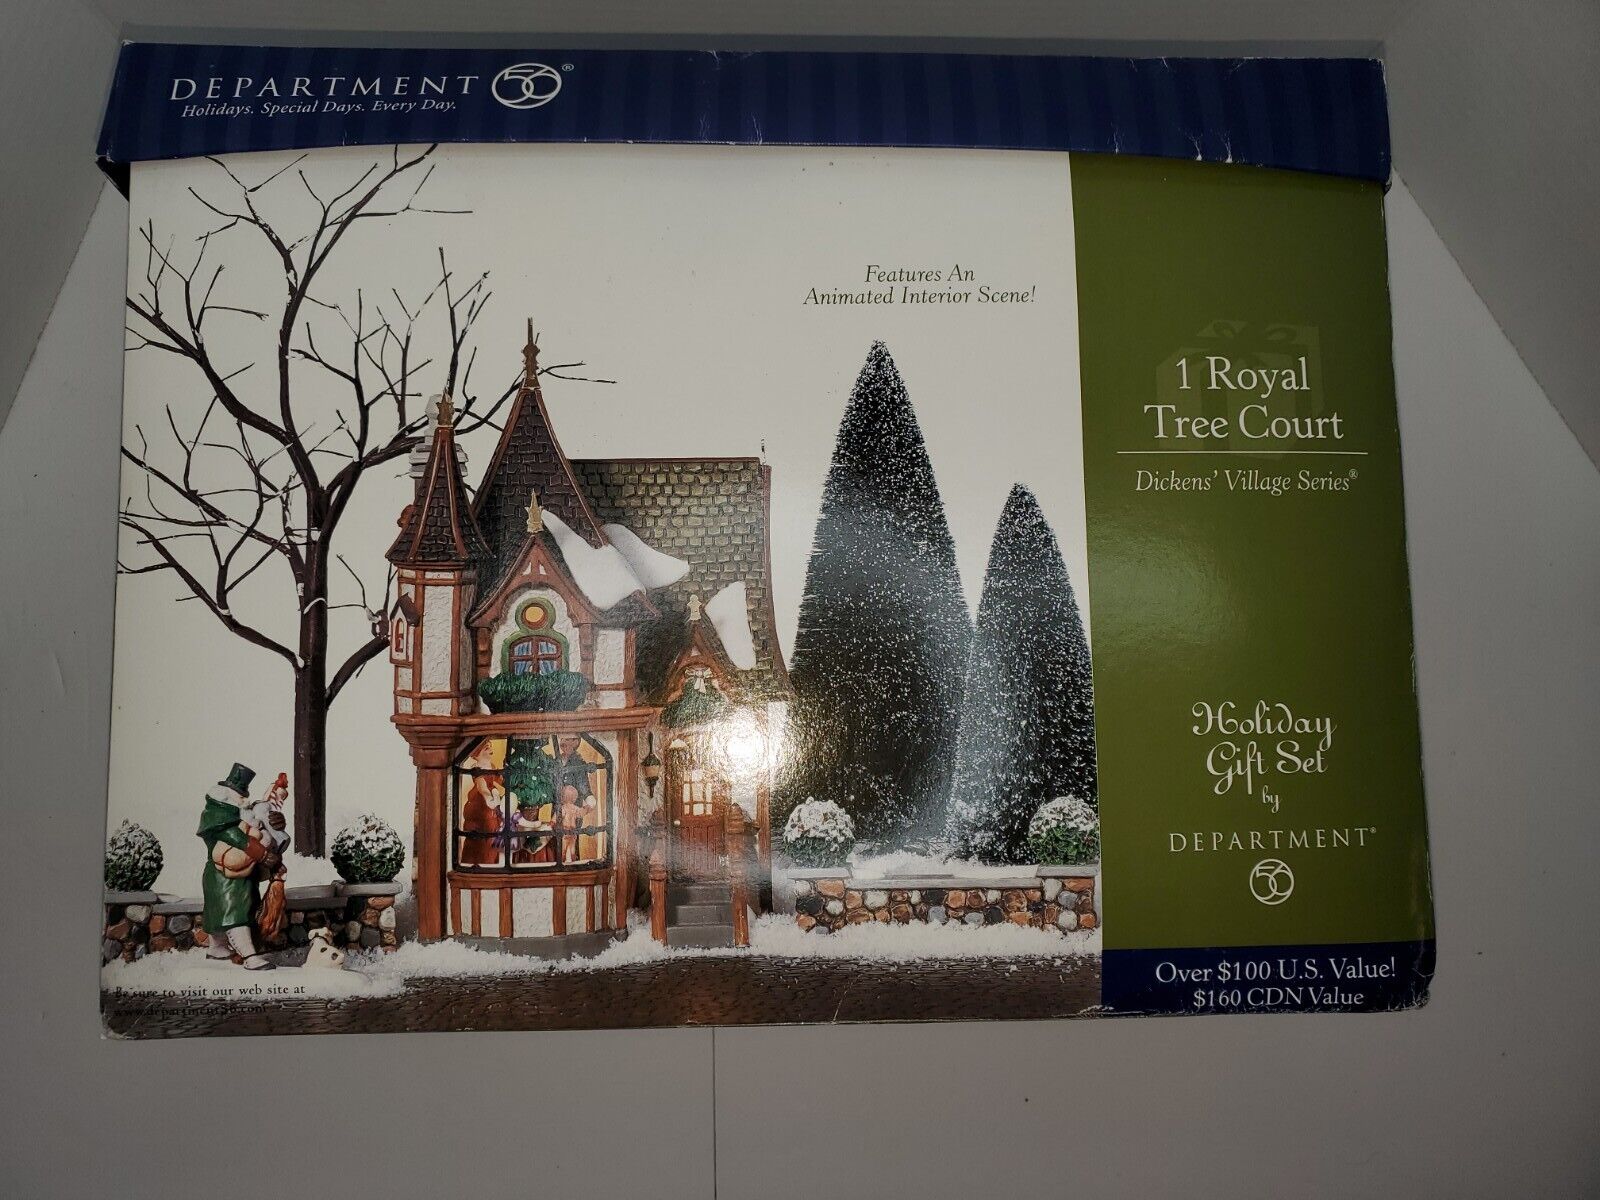 Dept 56 1 Royal Tree Court 2002 Holiday Gift Set #56.58506 in Original Box